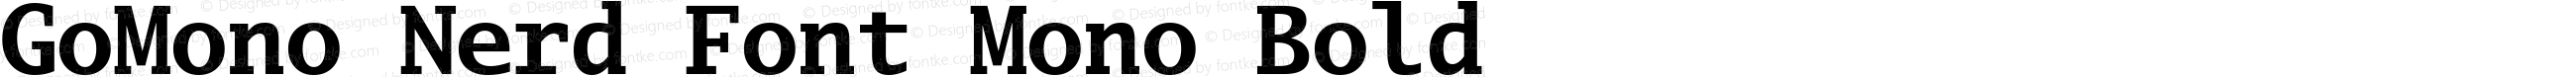 Go Mono Bold Nerd Font Complete Mono